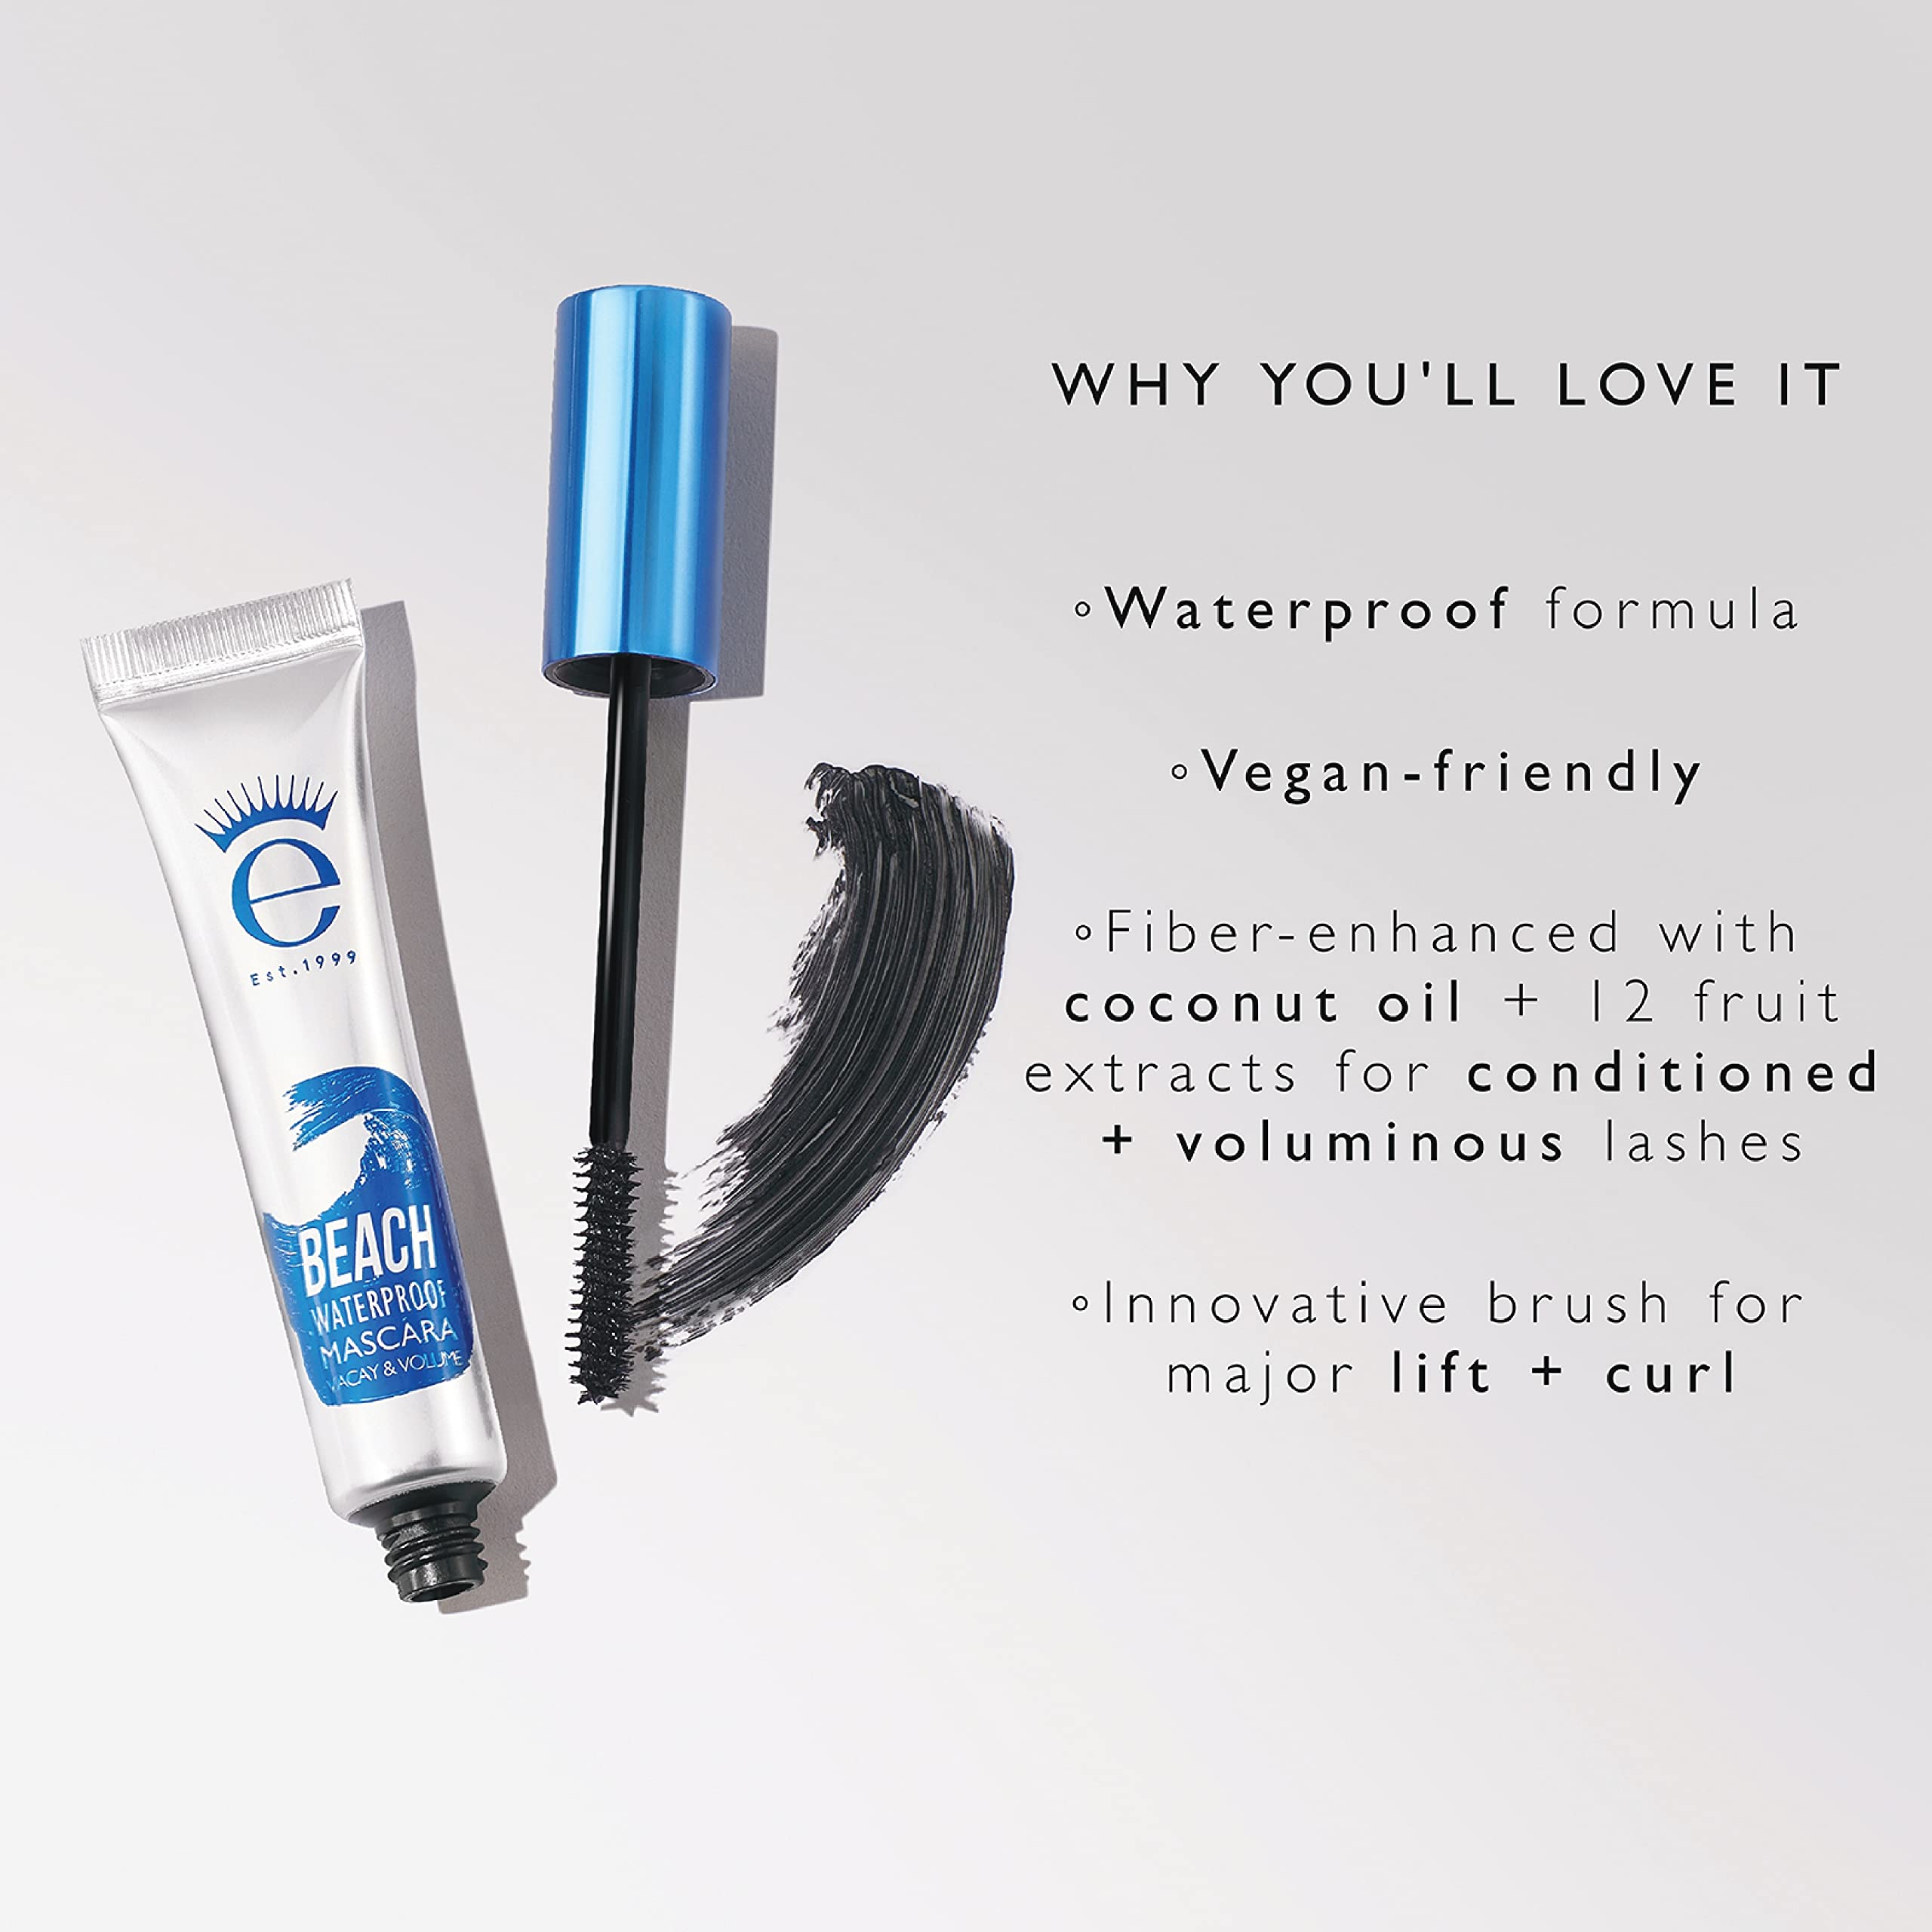 Eyeko Beach Waterproof Mascara